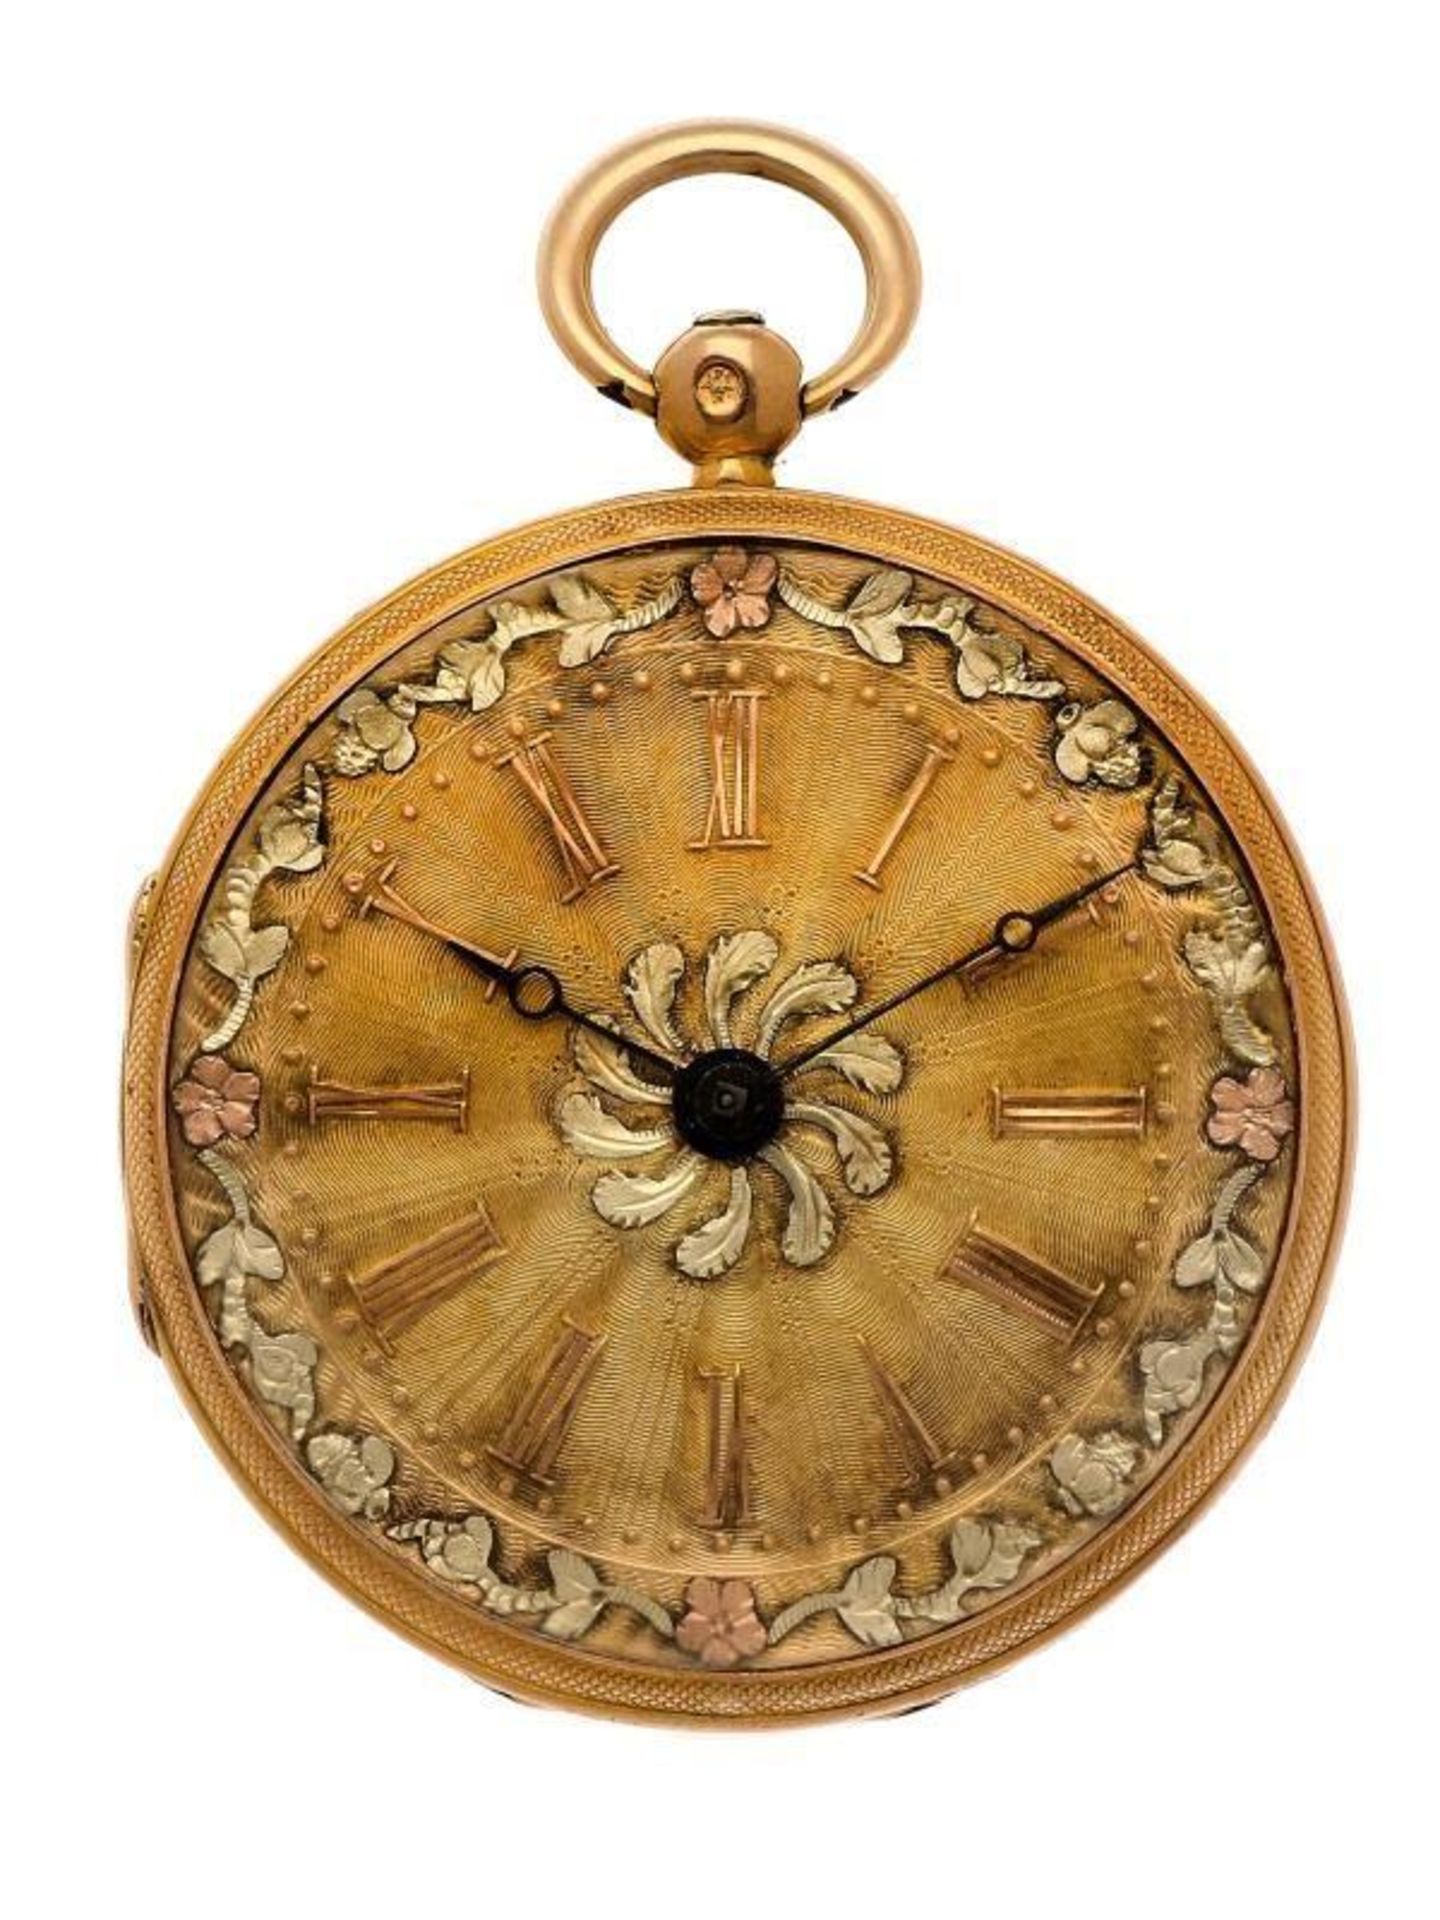 Pocket watch gold, verge escapement - Men's pocket watch - Manual winding - apprx. 1800.